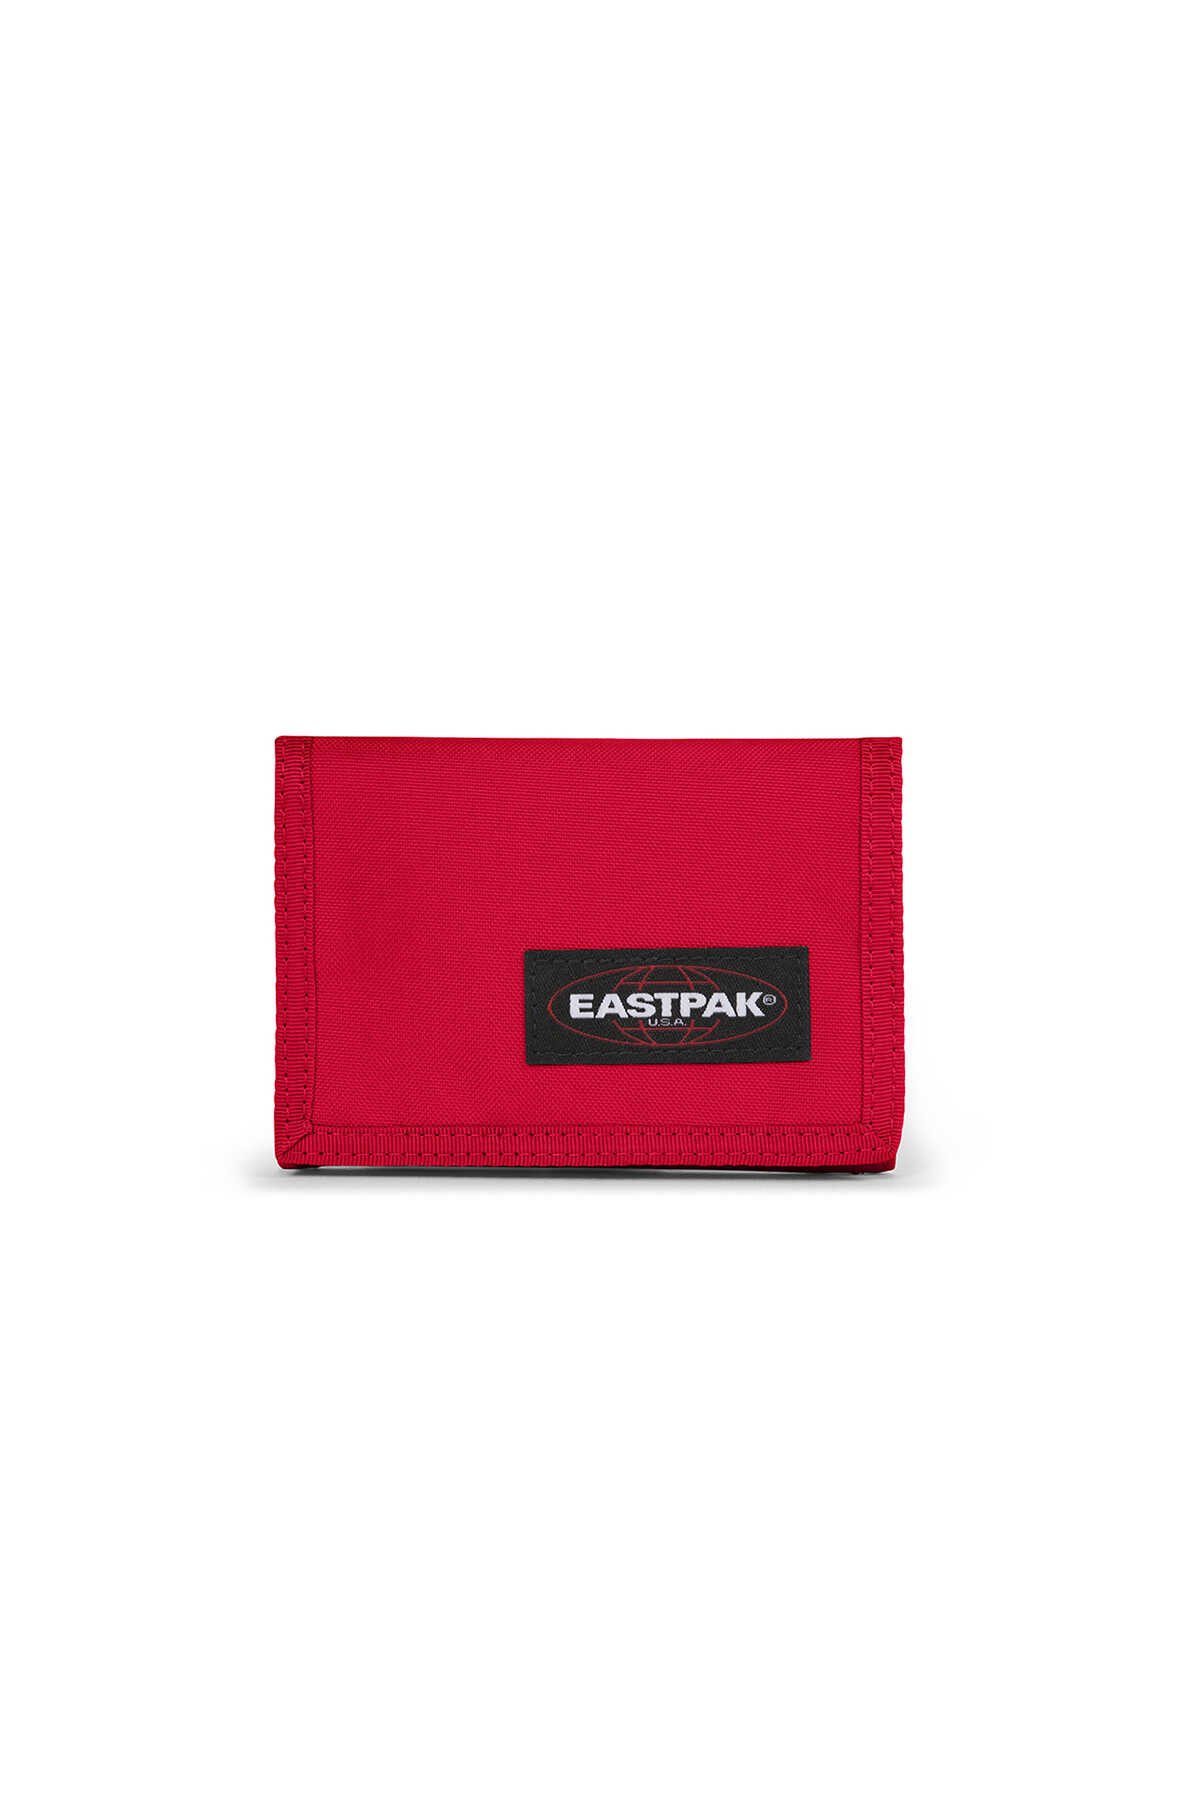 Eastpak - Eastpak CREW SINGLE Unisex Cüzdan Sailor Red